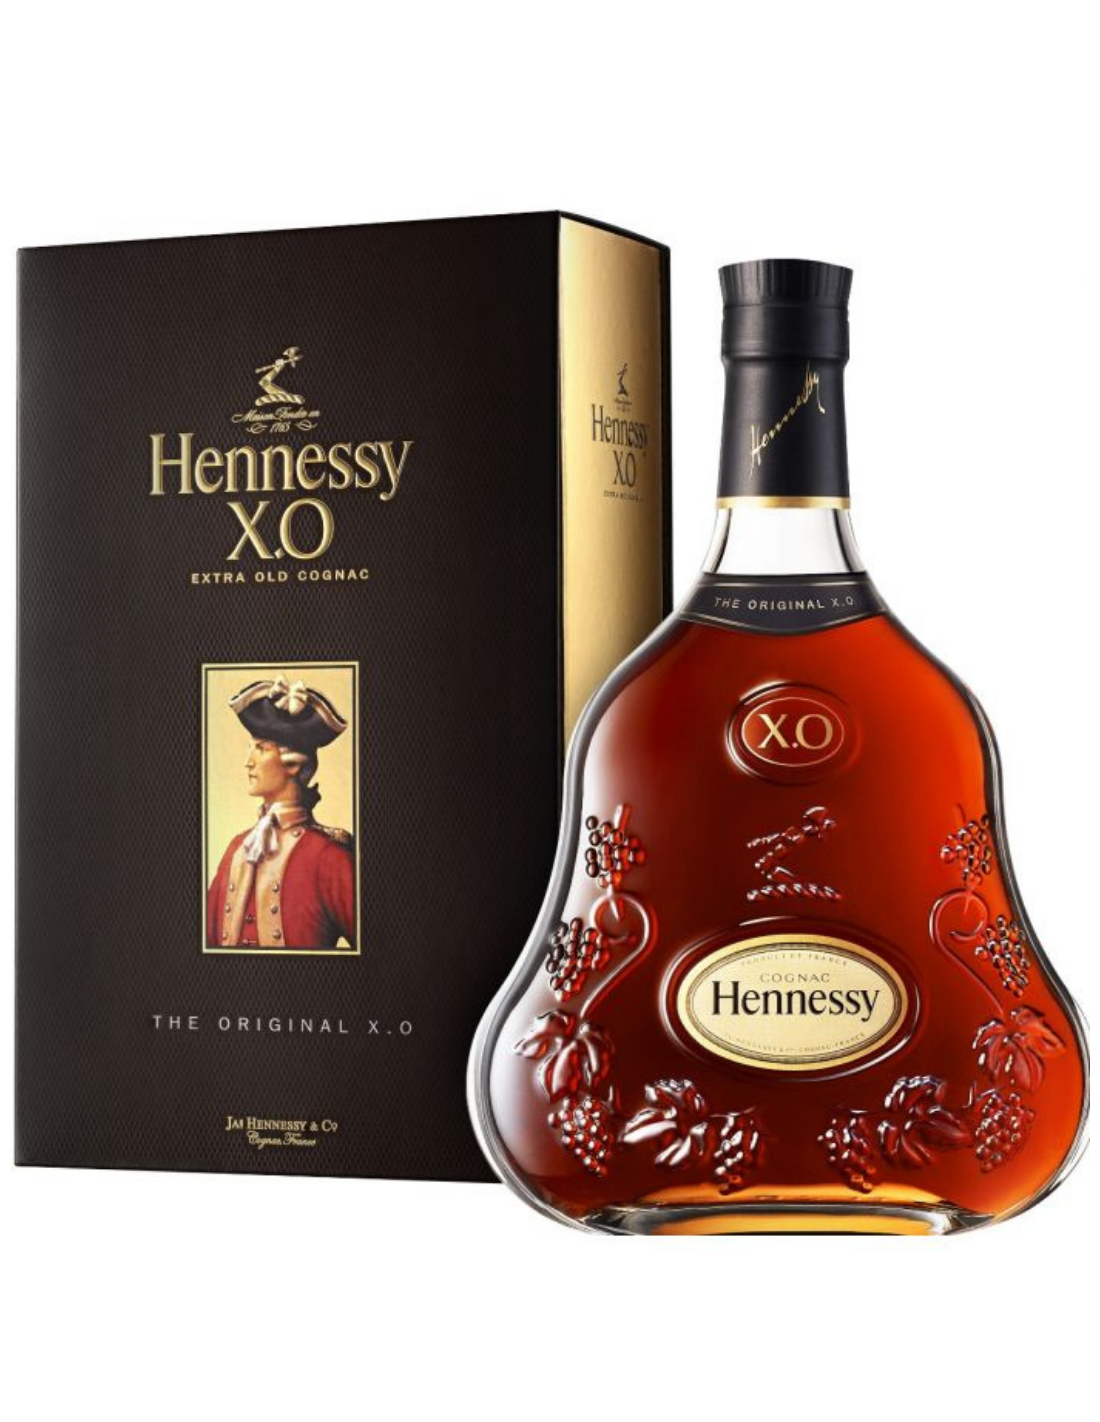 Coniac Hennessy XO, 40% alc., 0.7L, Franta alcooldiscount.ro